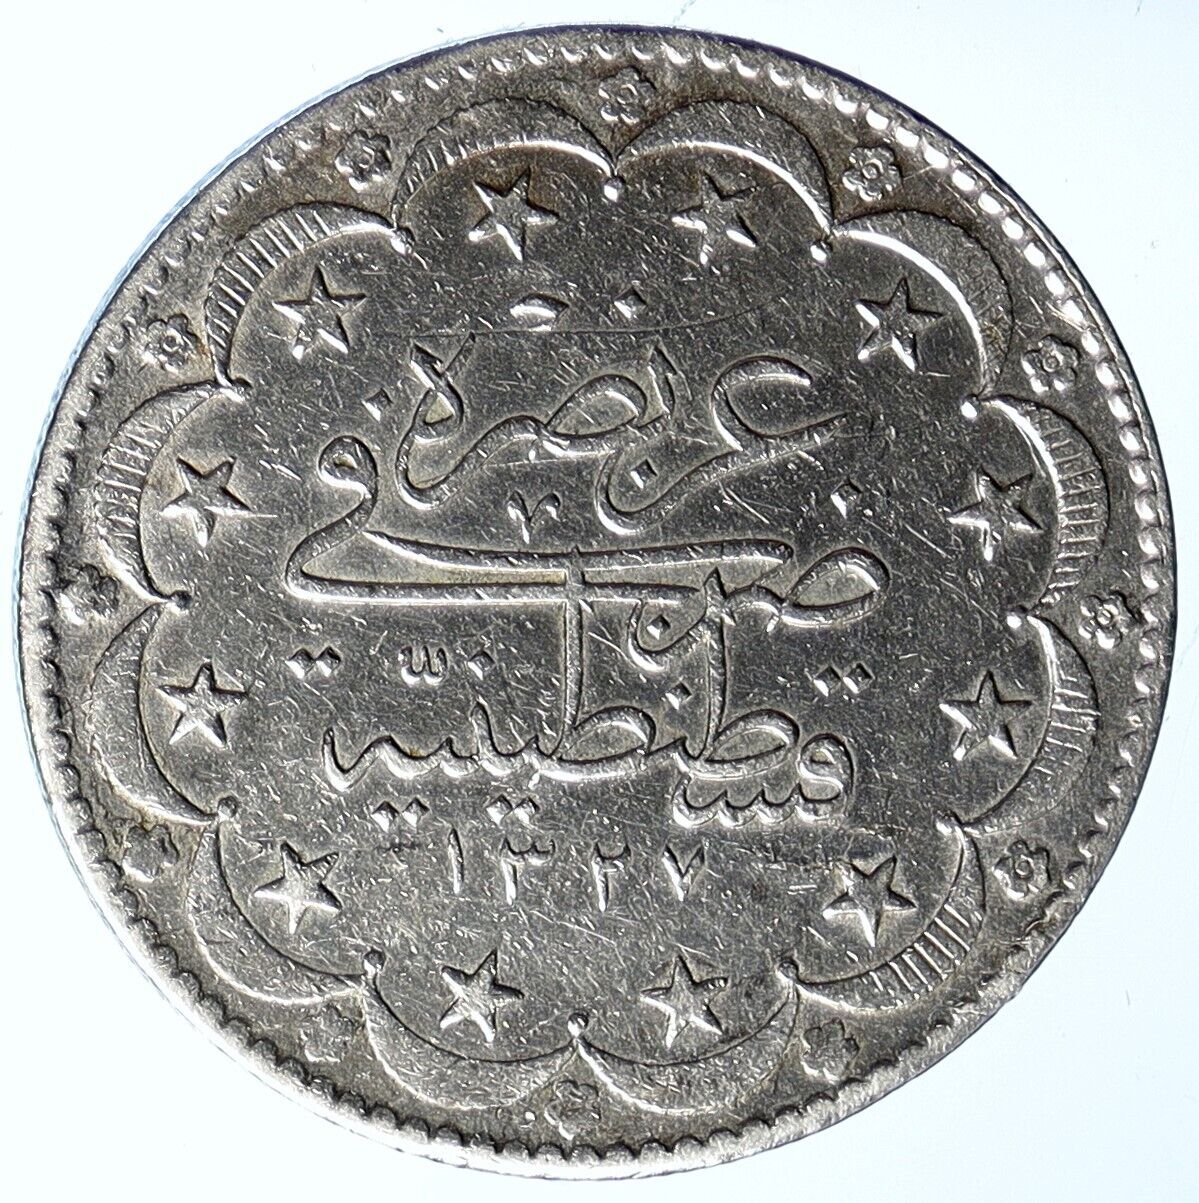 1327AH 1916-18 TURKEY OTTOMAN Sultan Mehmed V Resad Silver 20 Kurus Coin i112823